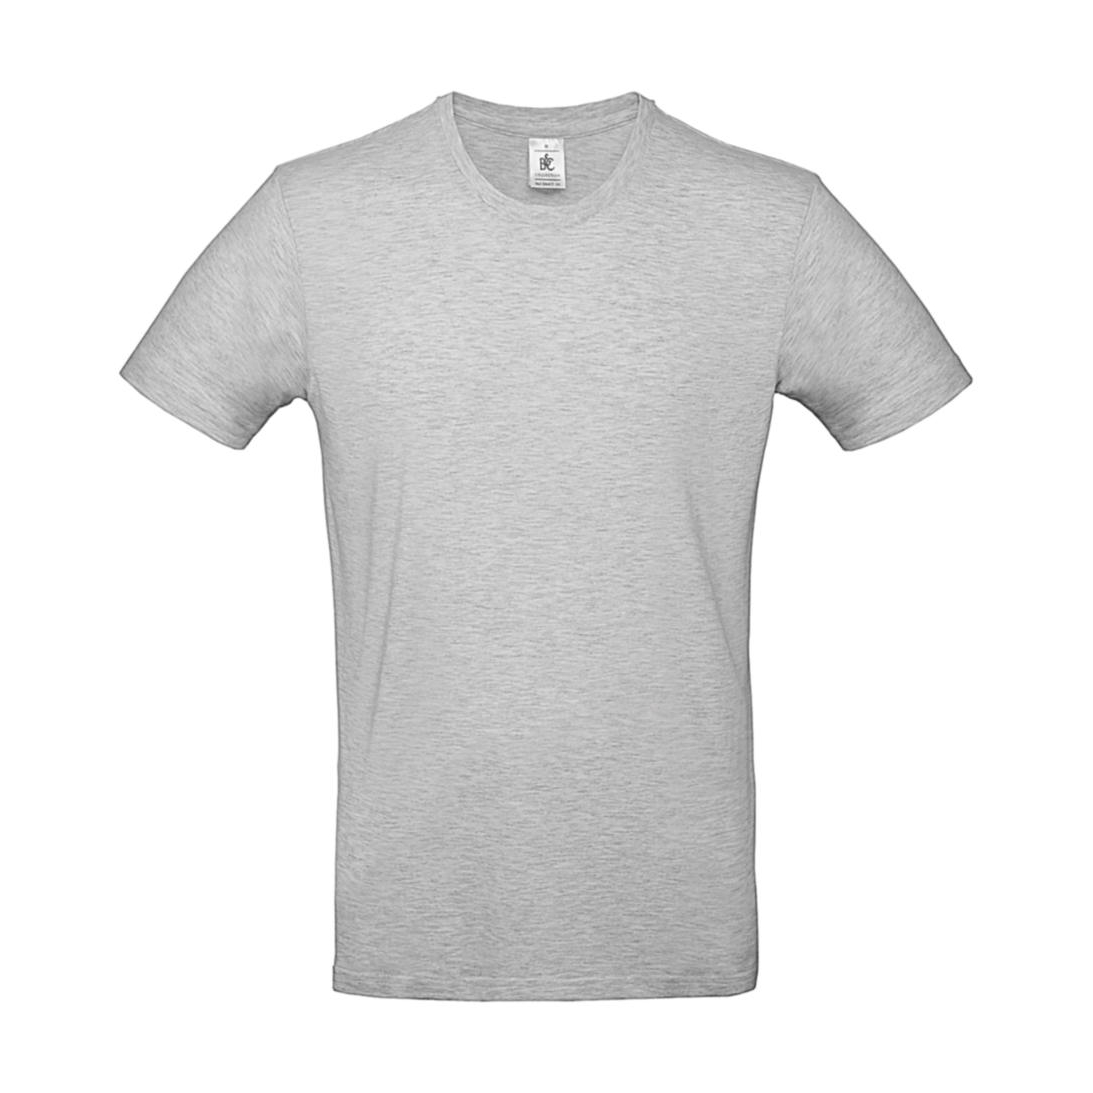 Triko pánské B&C E190 T-Shirt - světle šedé, XXL